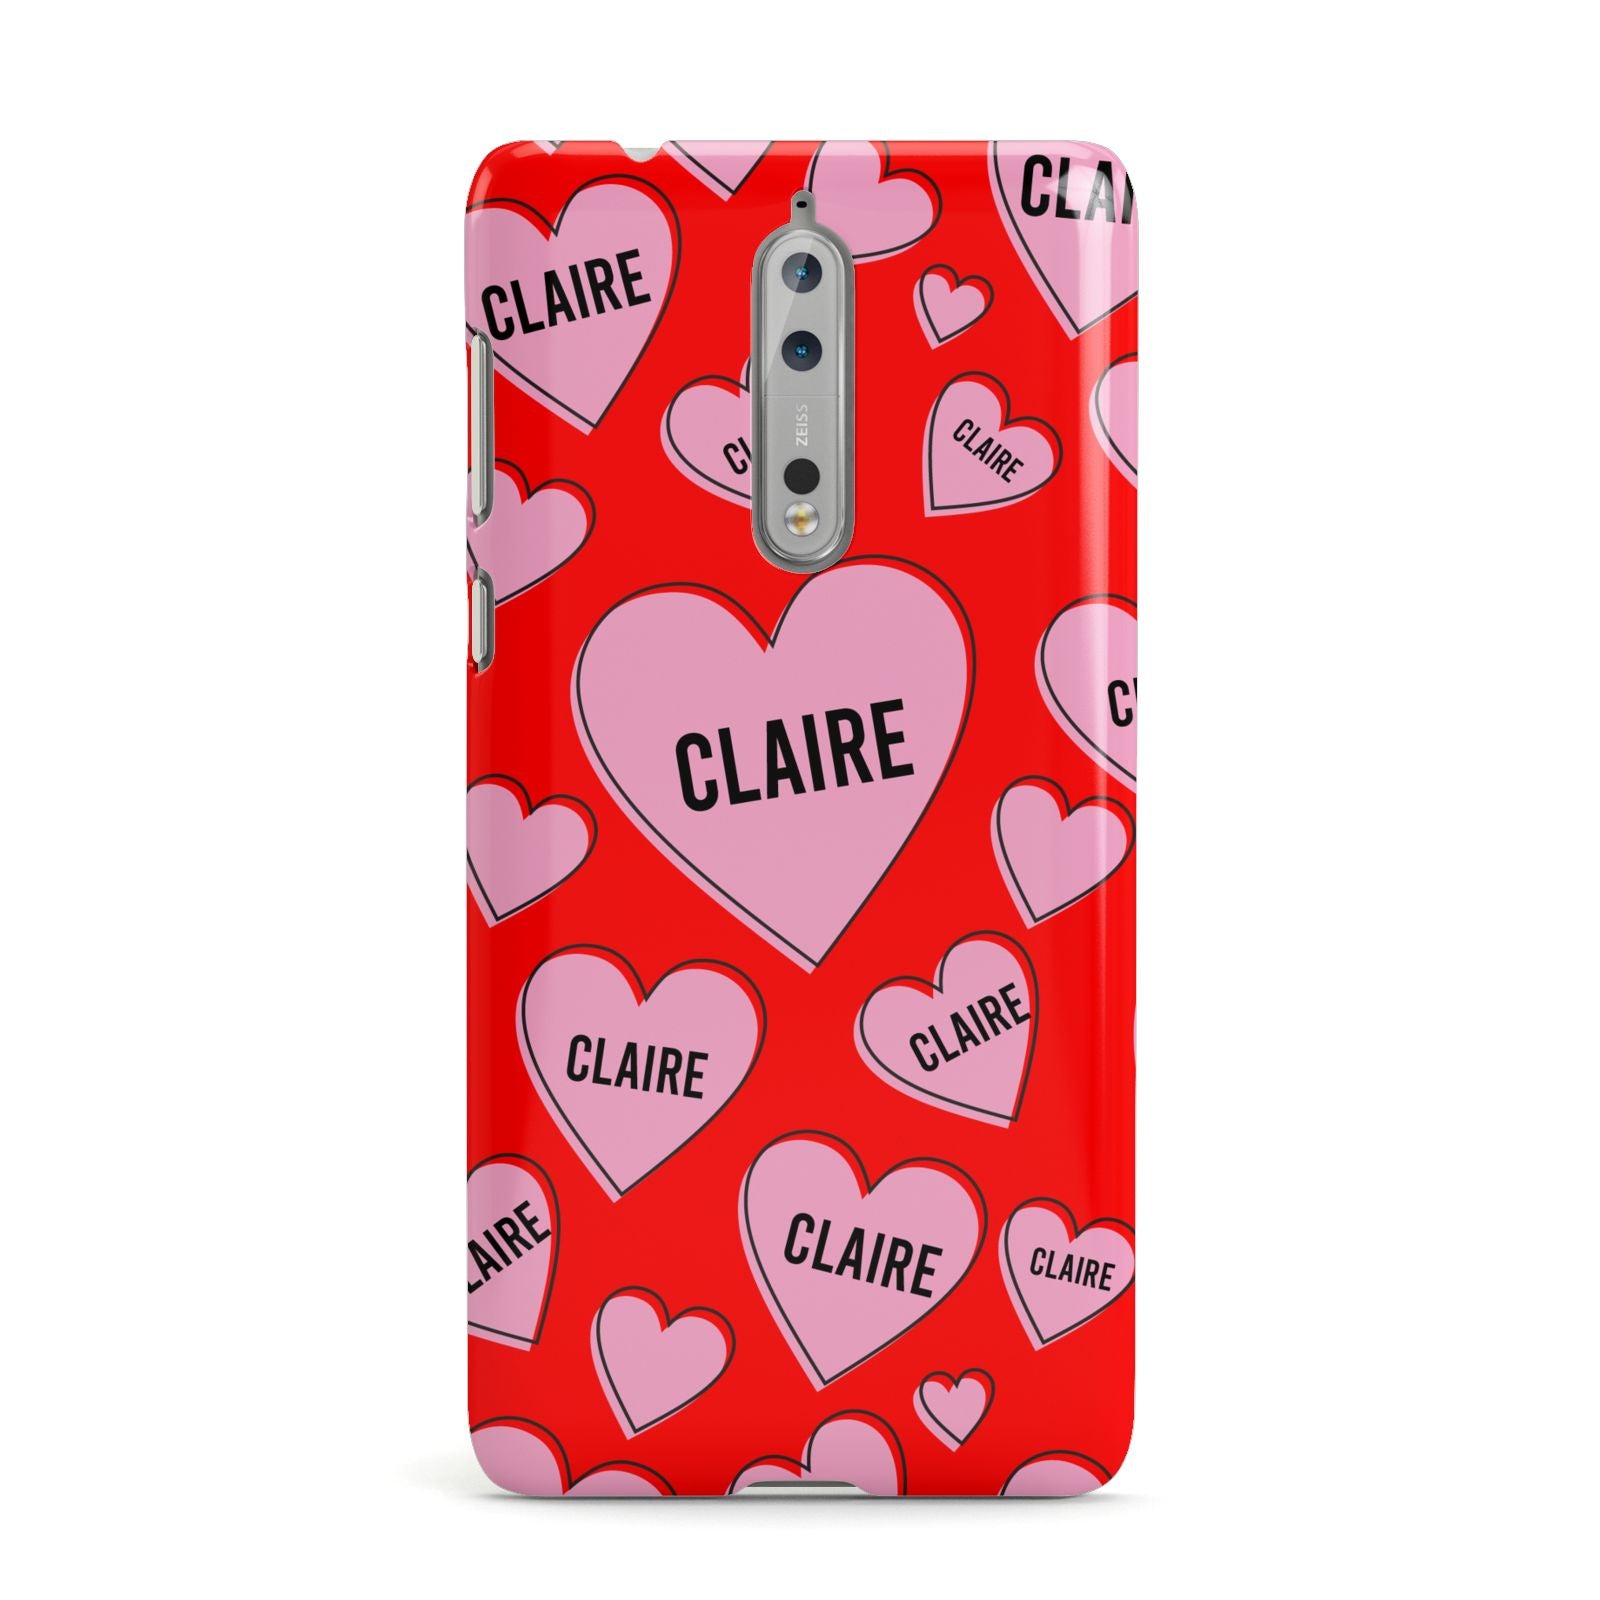 Personalised Hearts Nokia Case